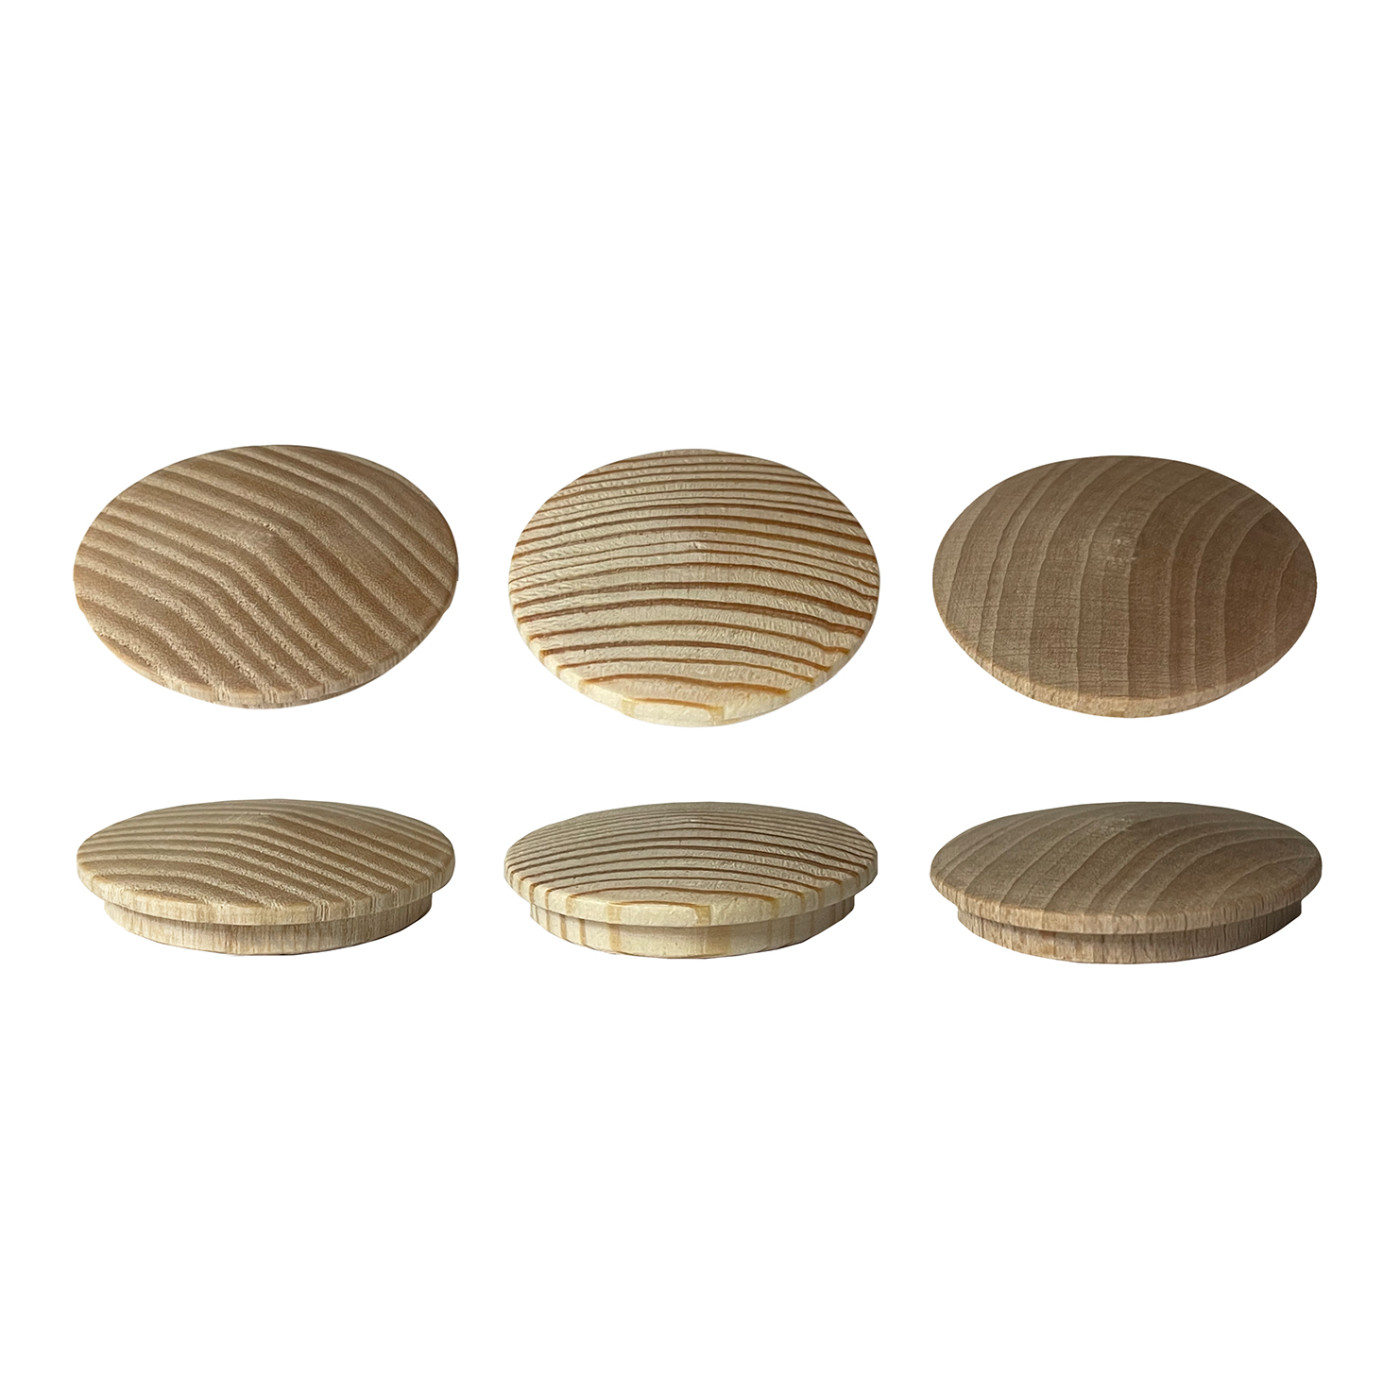 Set of 30 wooden caps, buttons (30 mm diameter, pine wood)